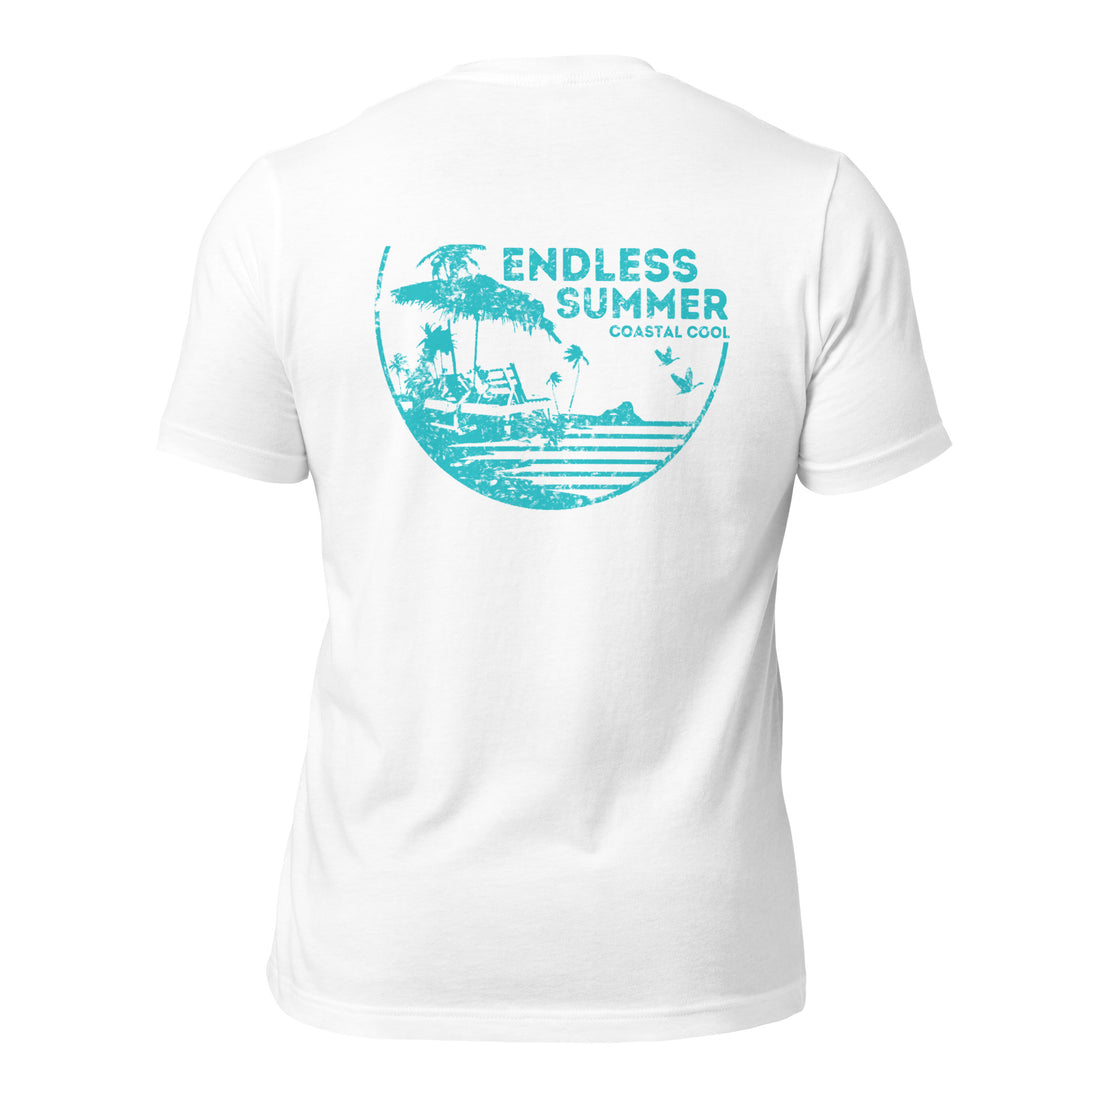 Endless Summer Tee - Coastal Cool - Swimwear and Beachwear - Recycled fabrics